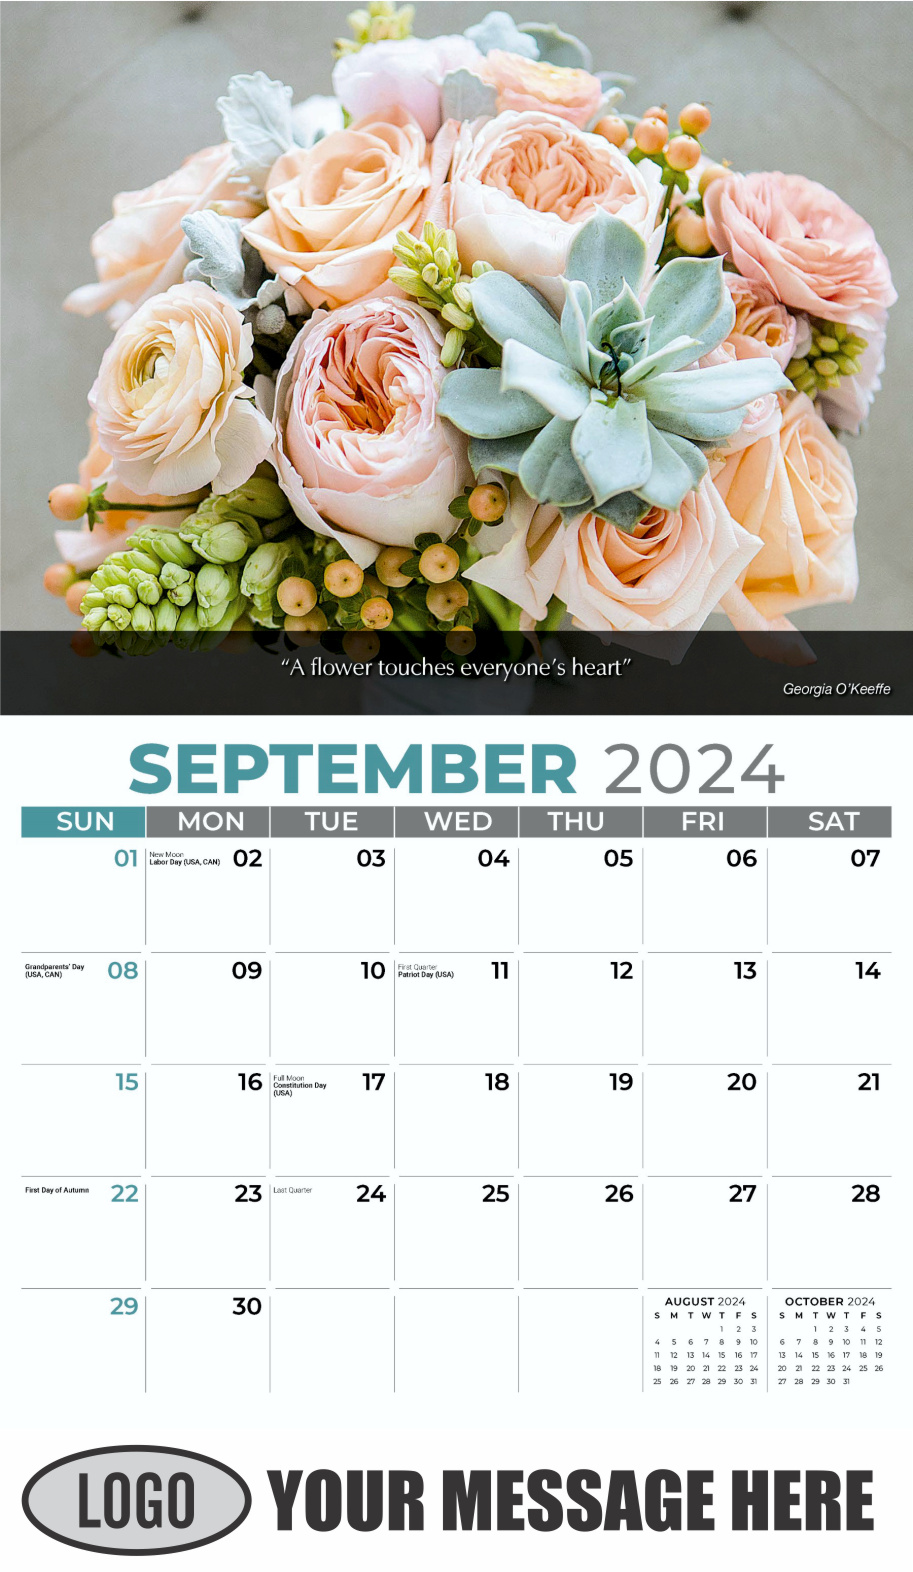 Flowers and Gardens 2024 Business Advertising Calendar - September